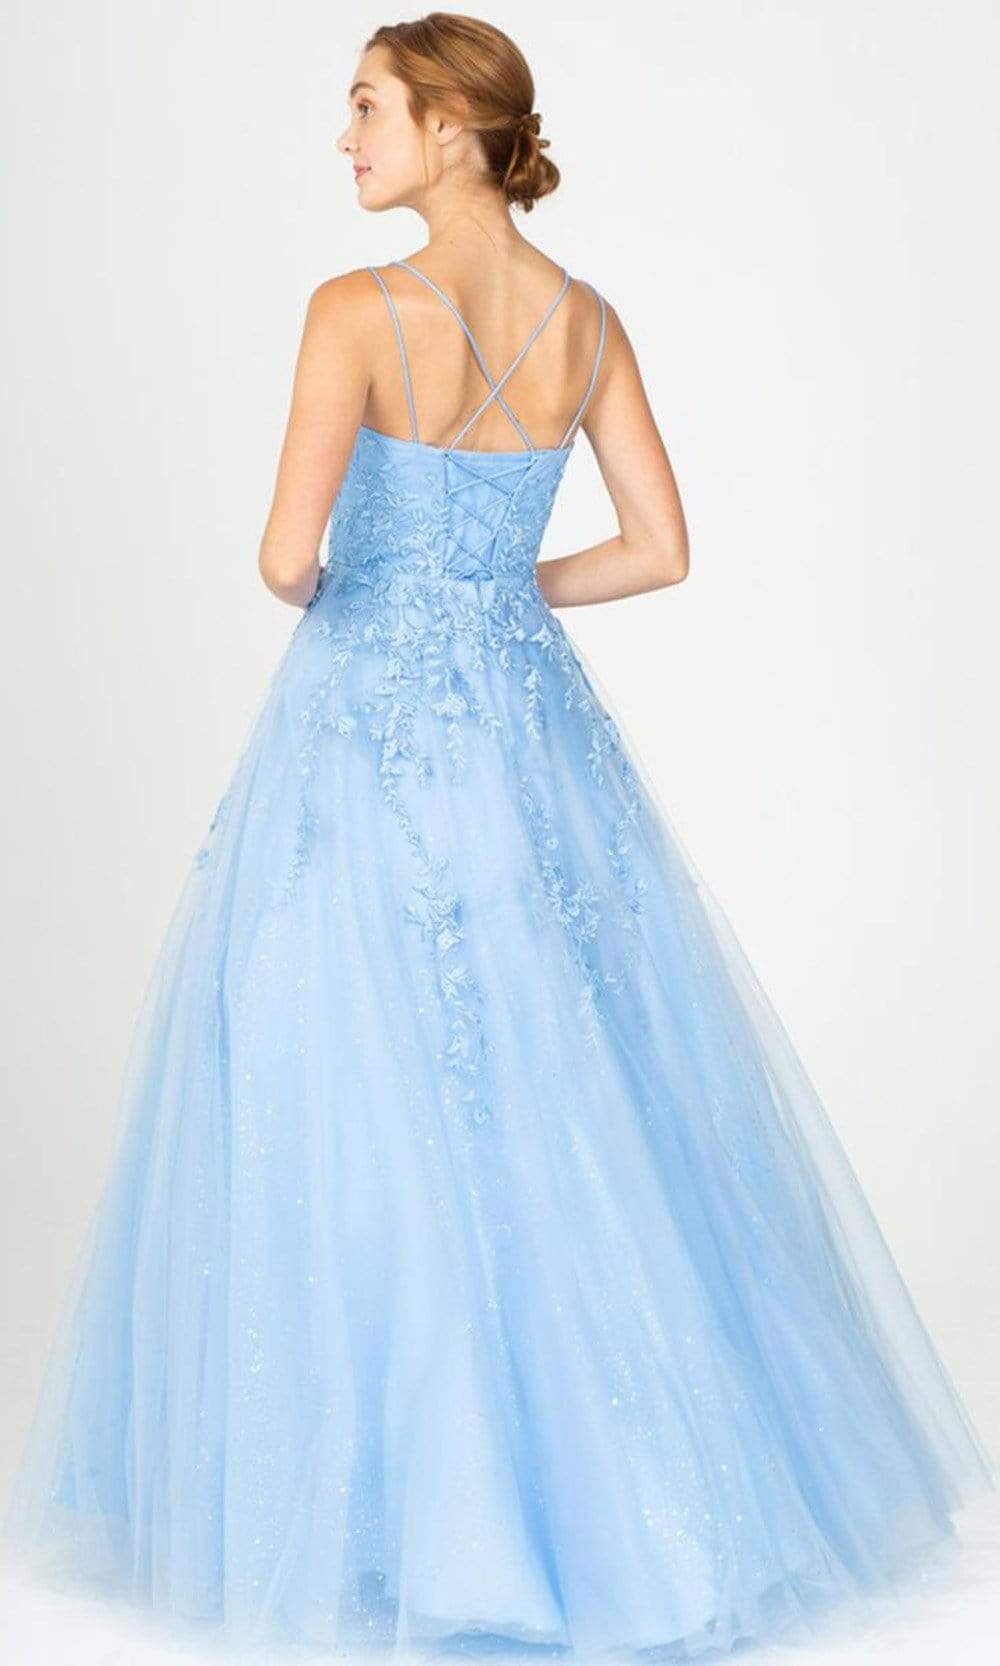 Eureka Fashion - 9757 Lace Embroidered A-Line Dress Prom Dresses